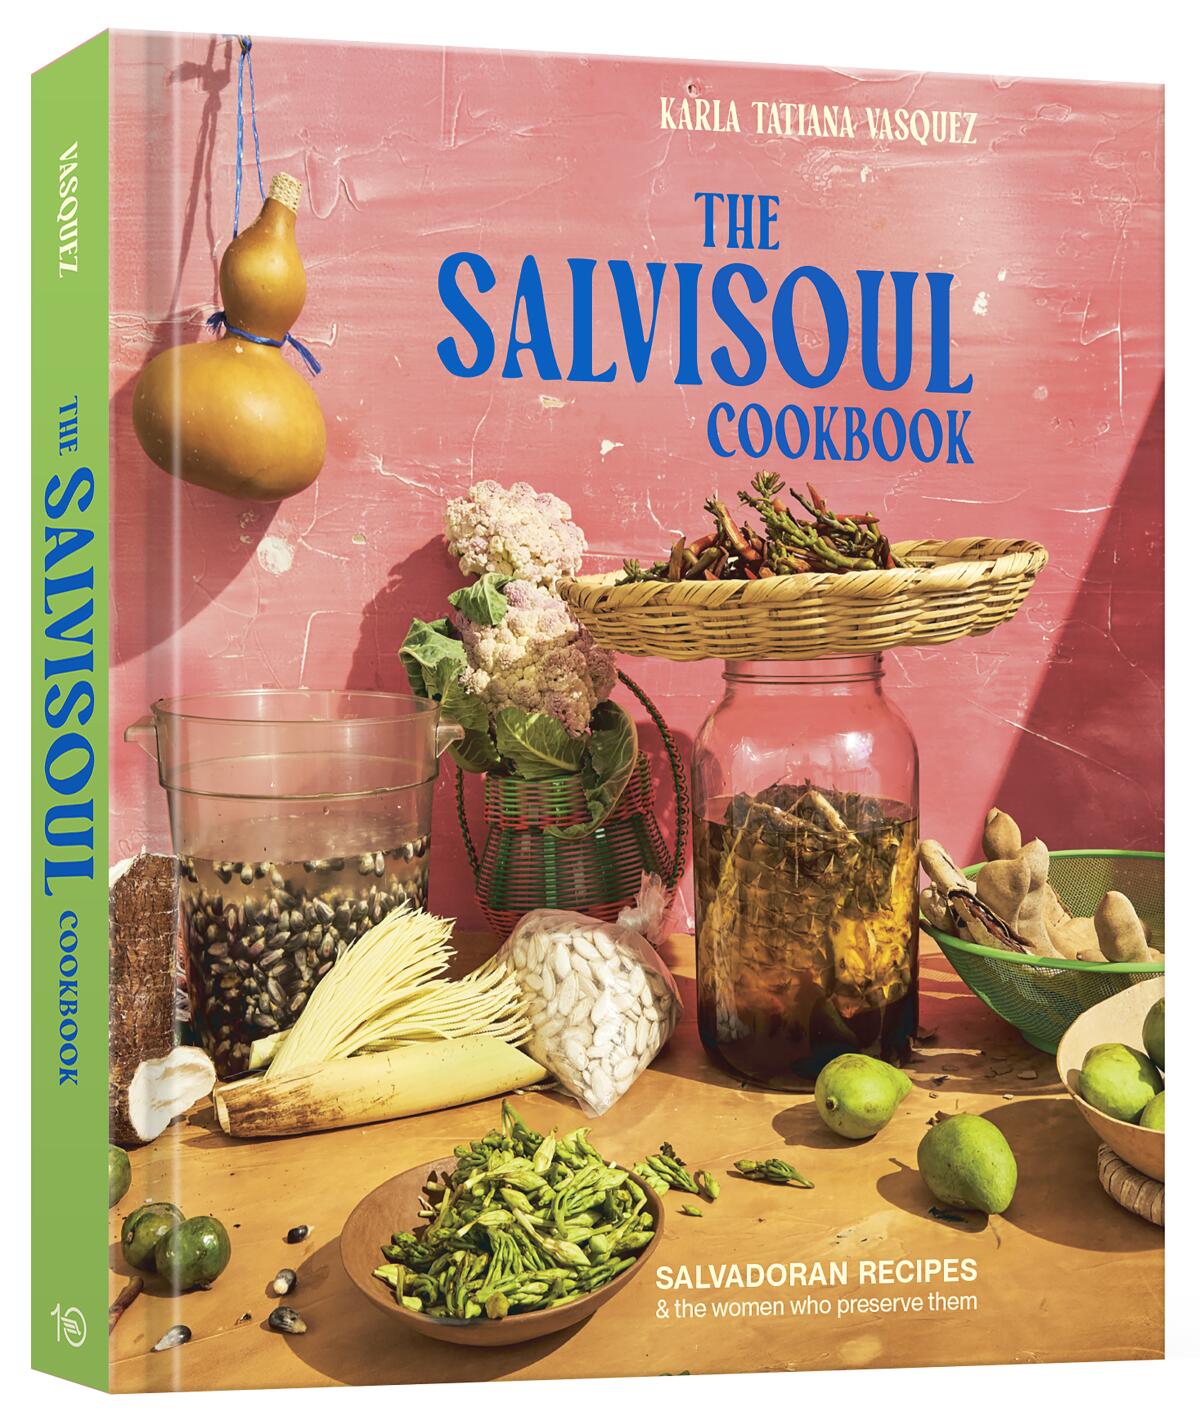 "The SalviSoul Cookbook: Salvadoran Recipes and the Women Who Preserve Them," by Karla Tatiana Vasquez.